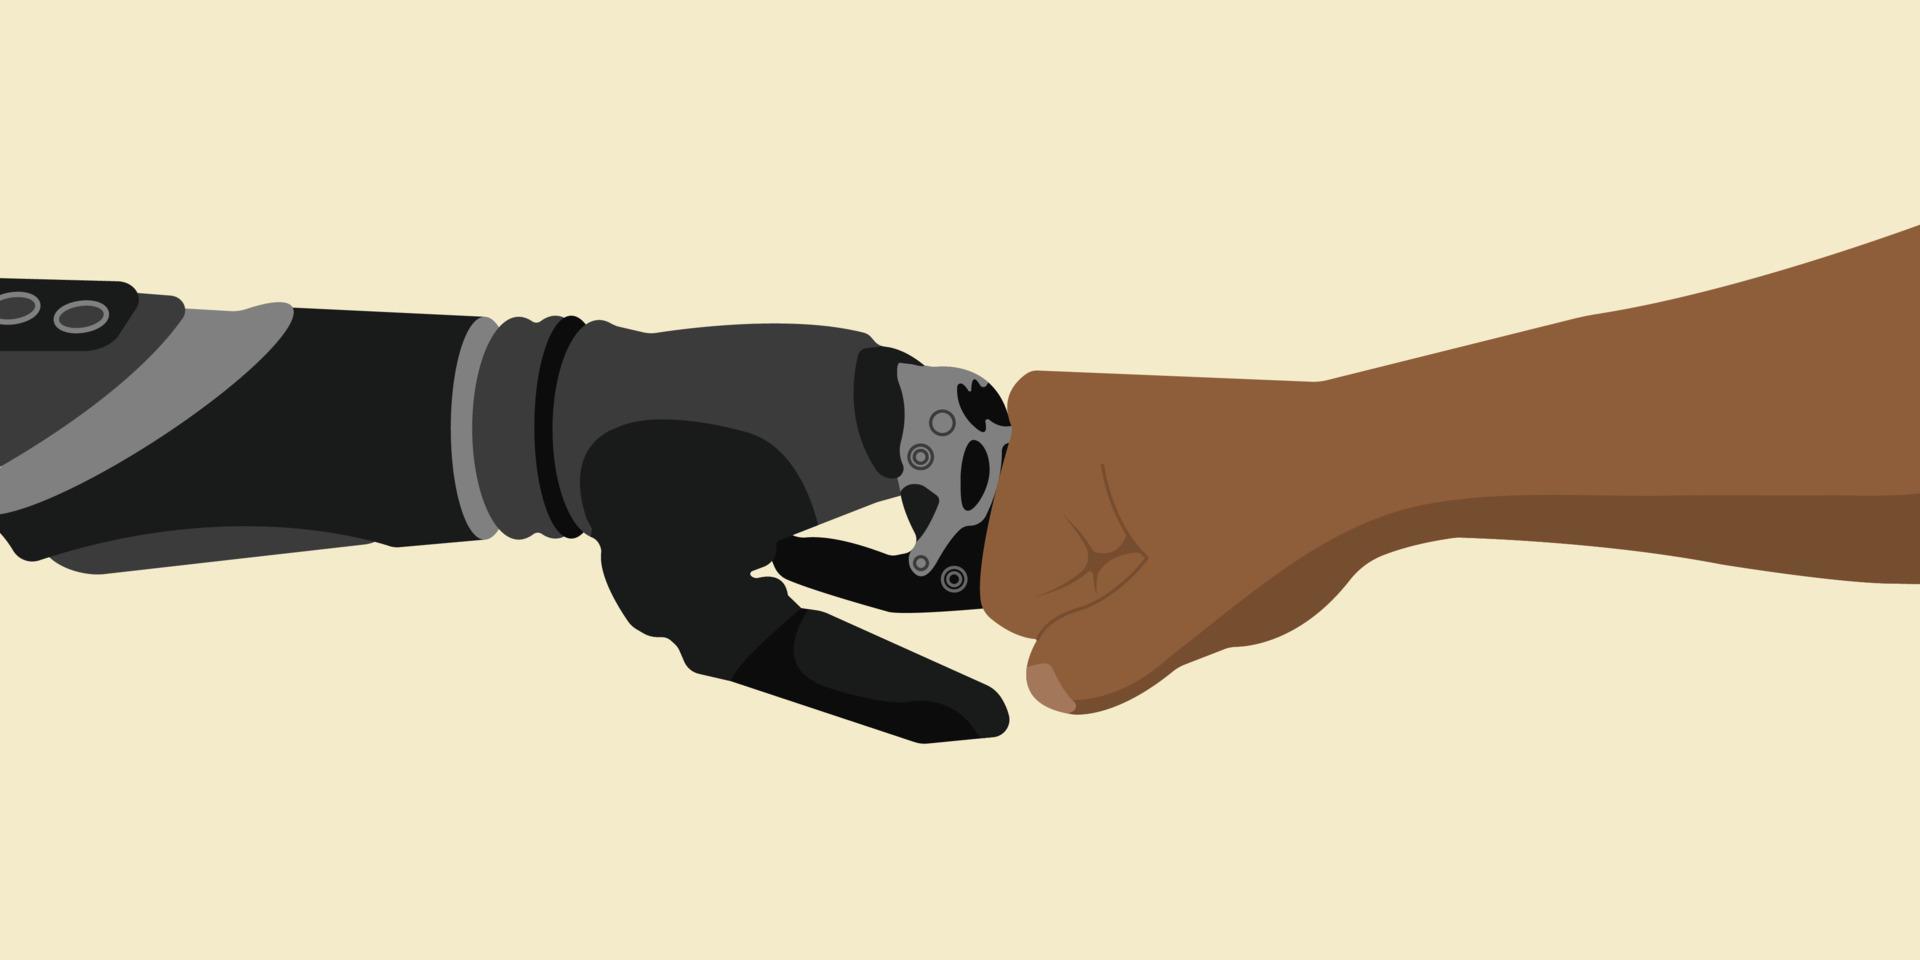 Robot Hand and Human Hand. Intelligence Technology. Symbol of future cooperation, technological progress, innovation. Flat design vector illustration.